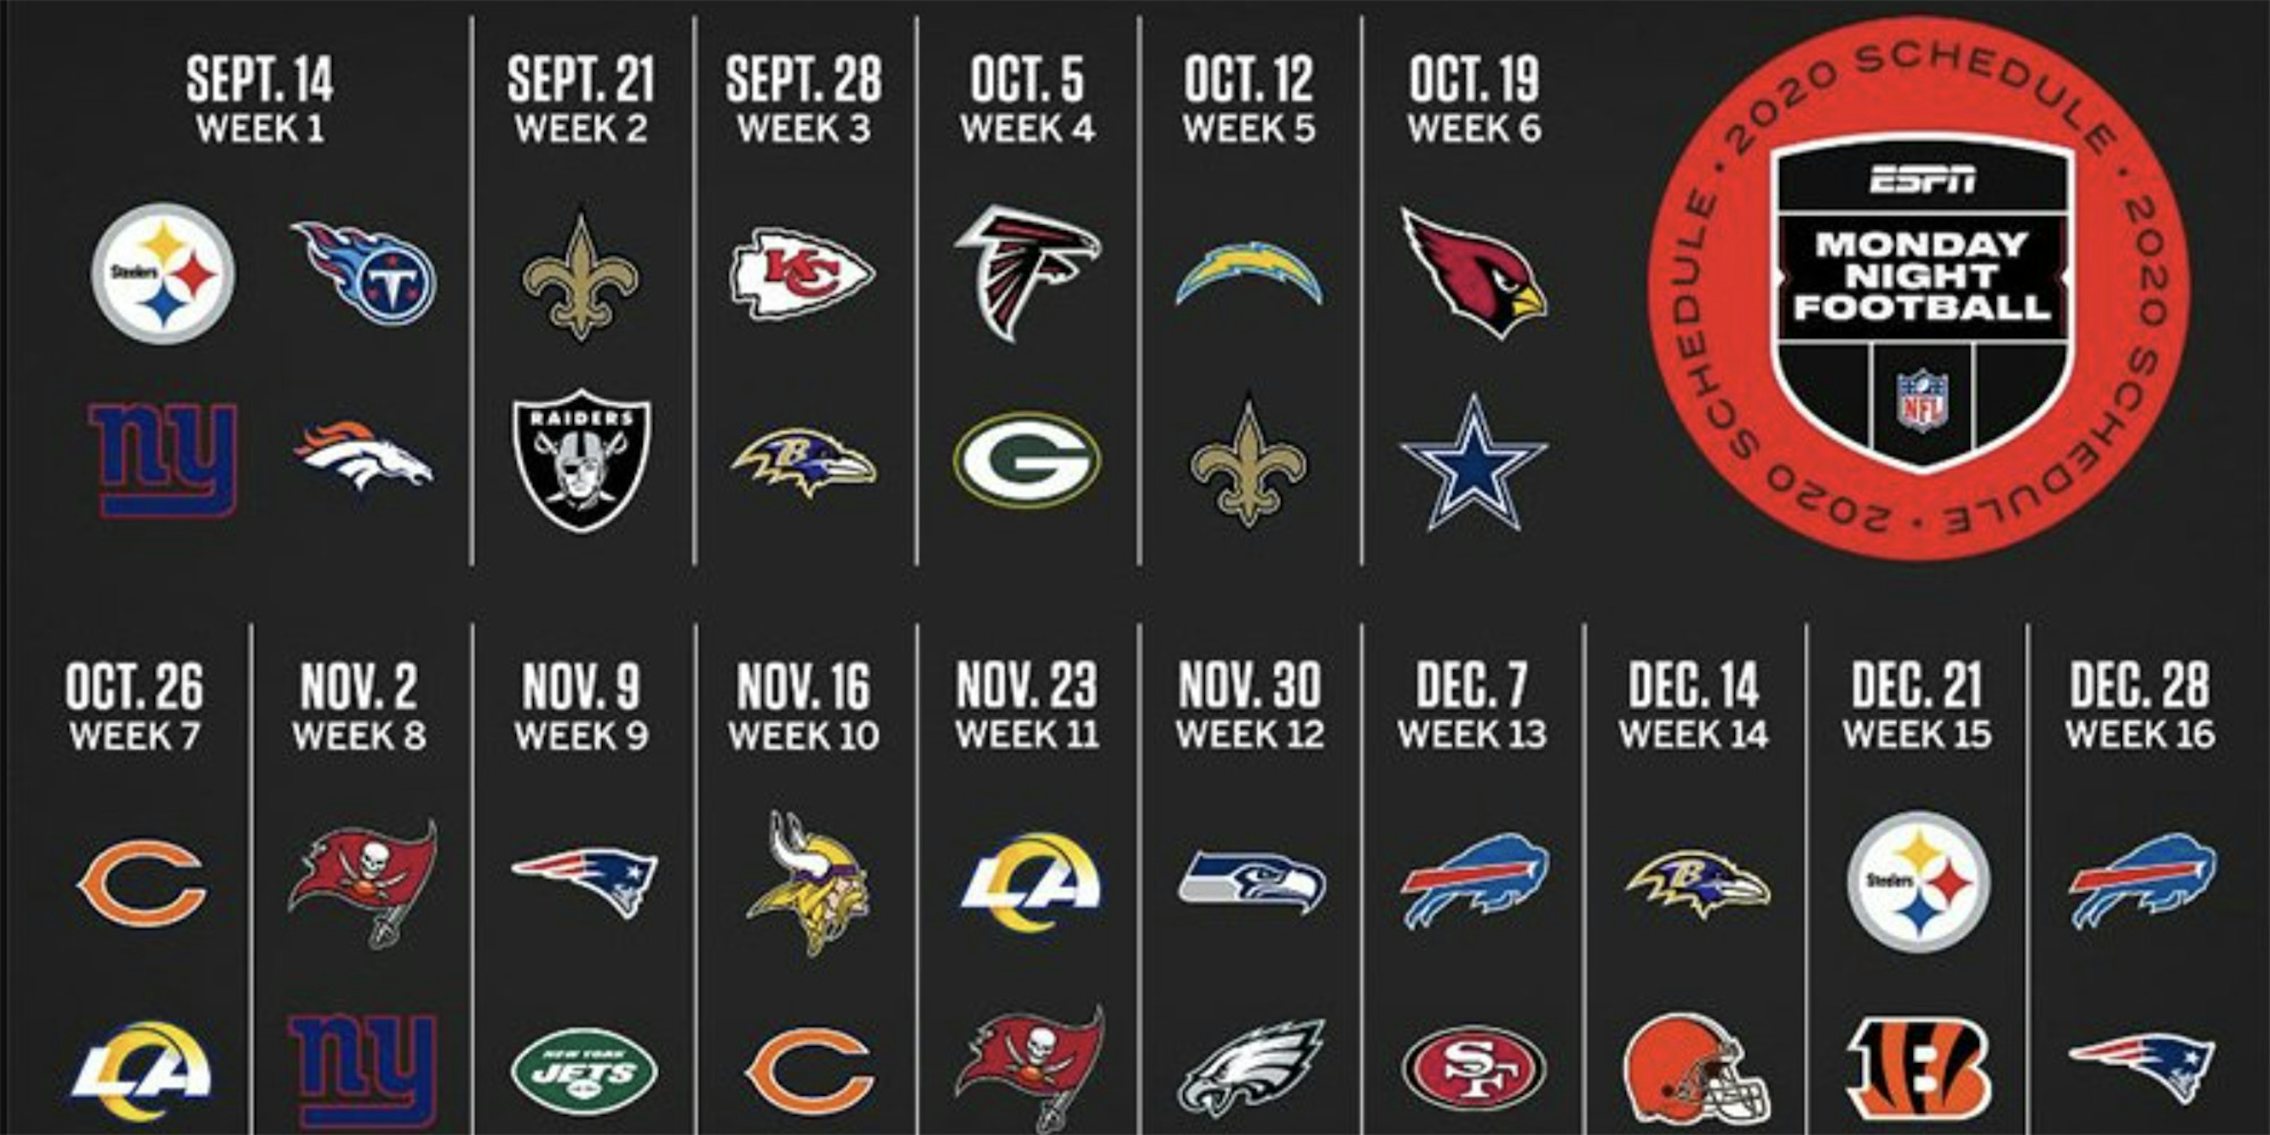 NFL Monday Night Football schedule stream monday night football